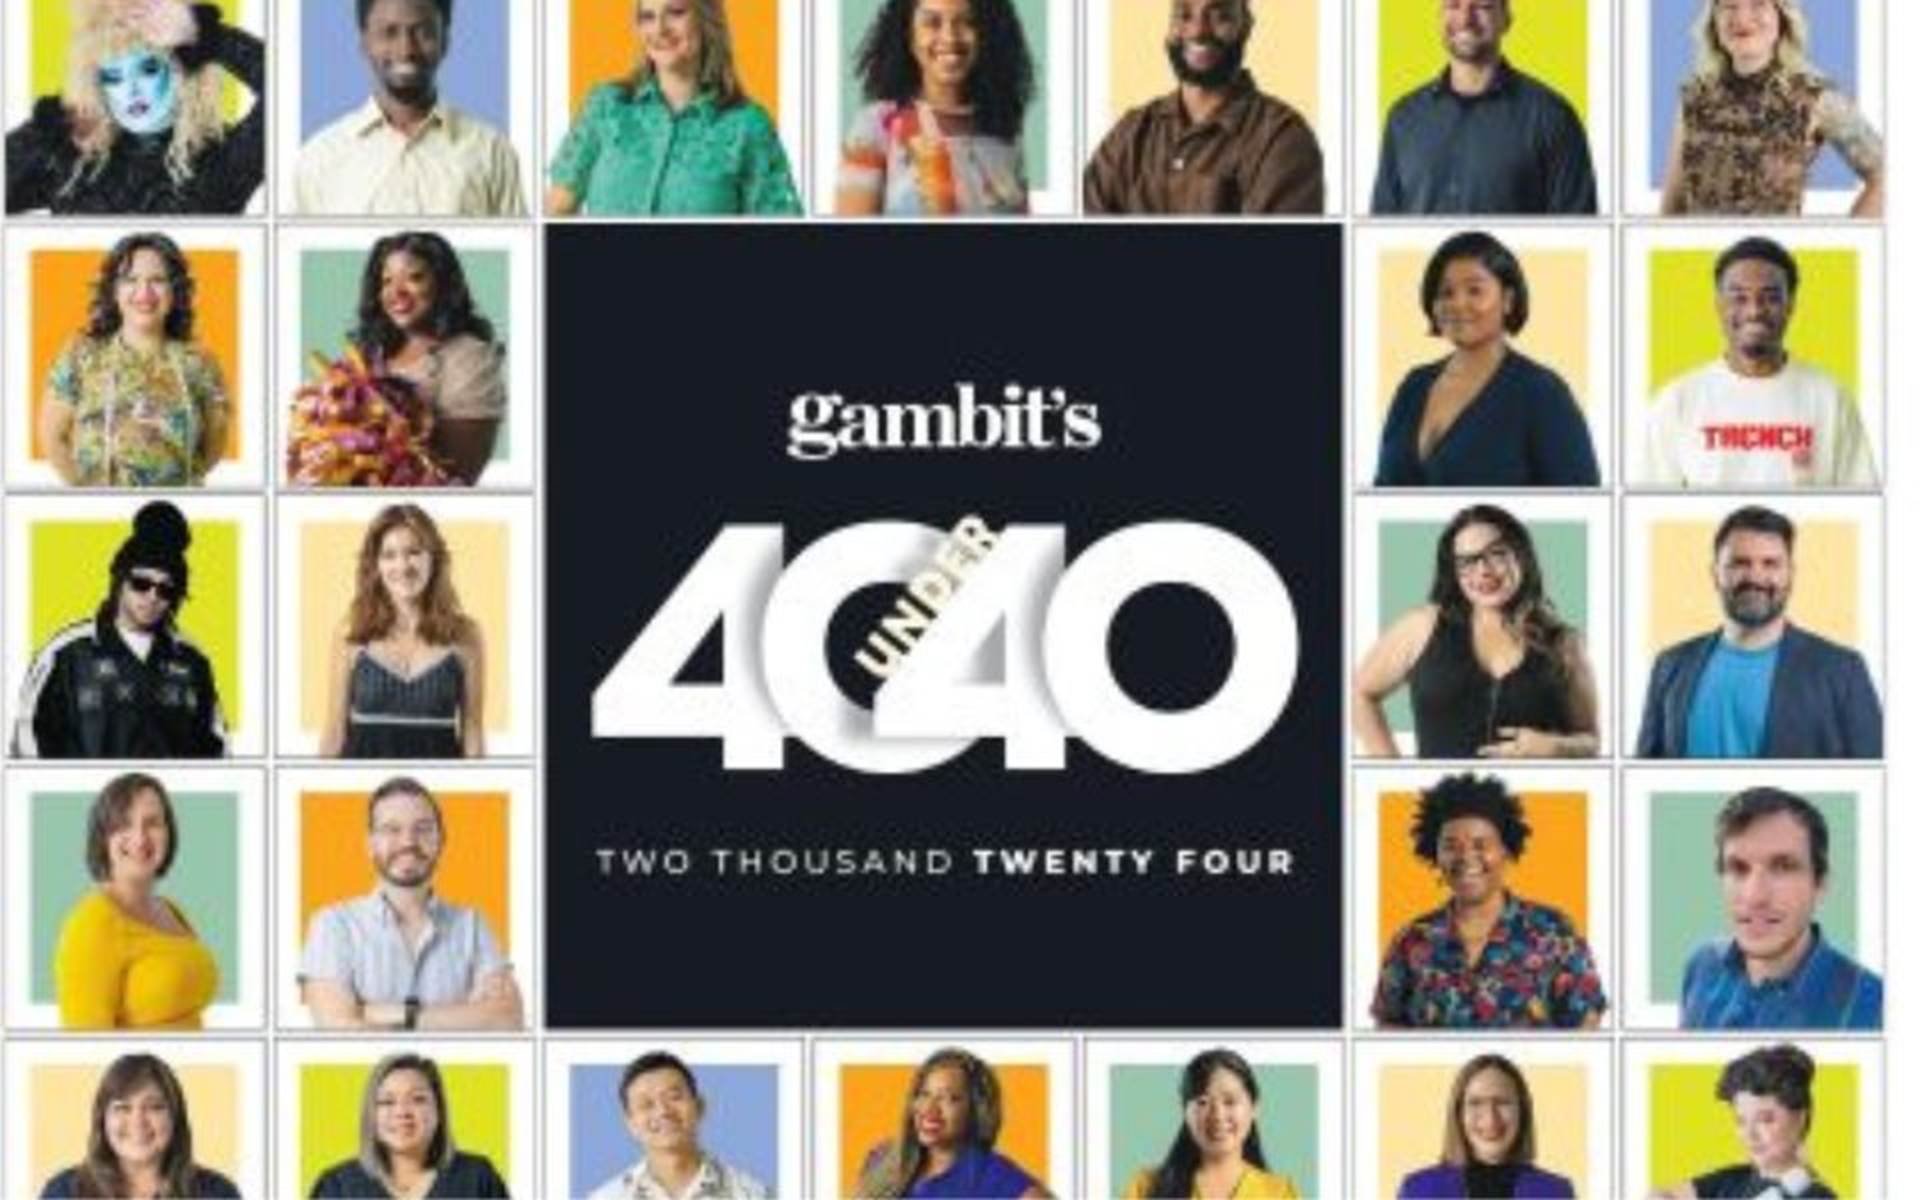 Gambits 40 Under 40